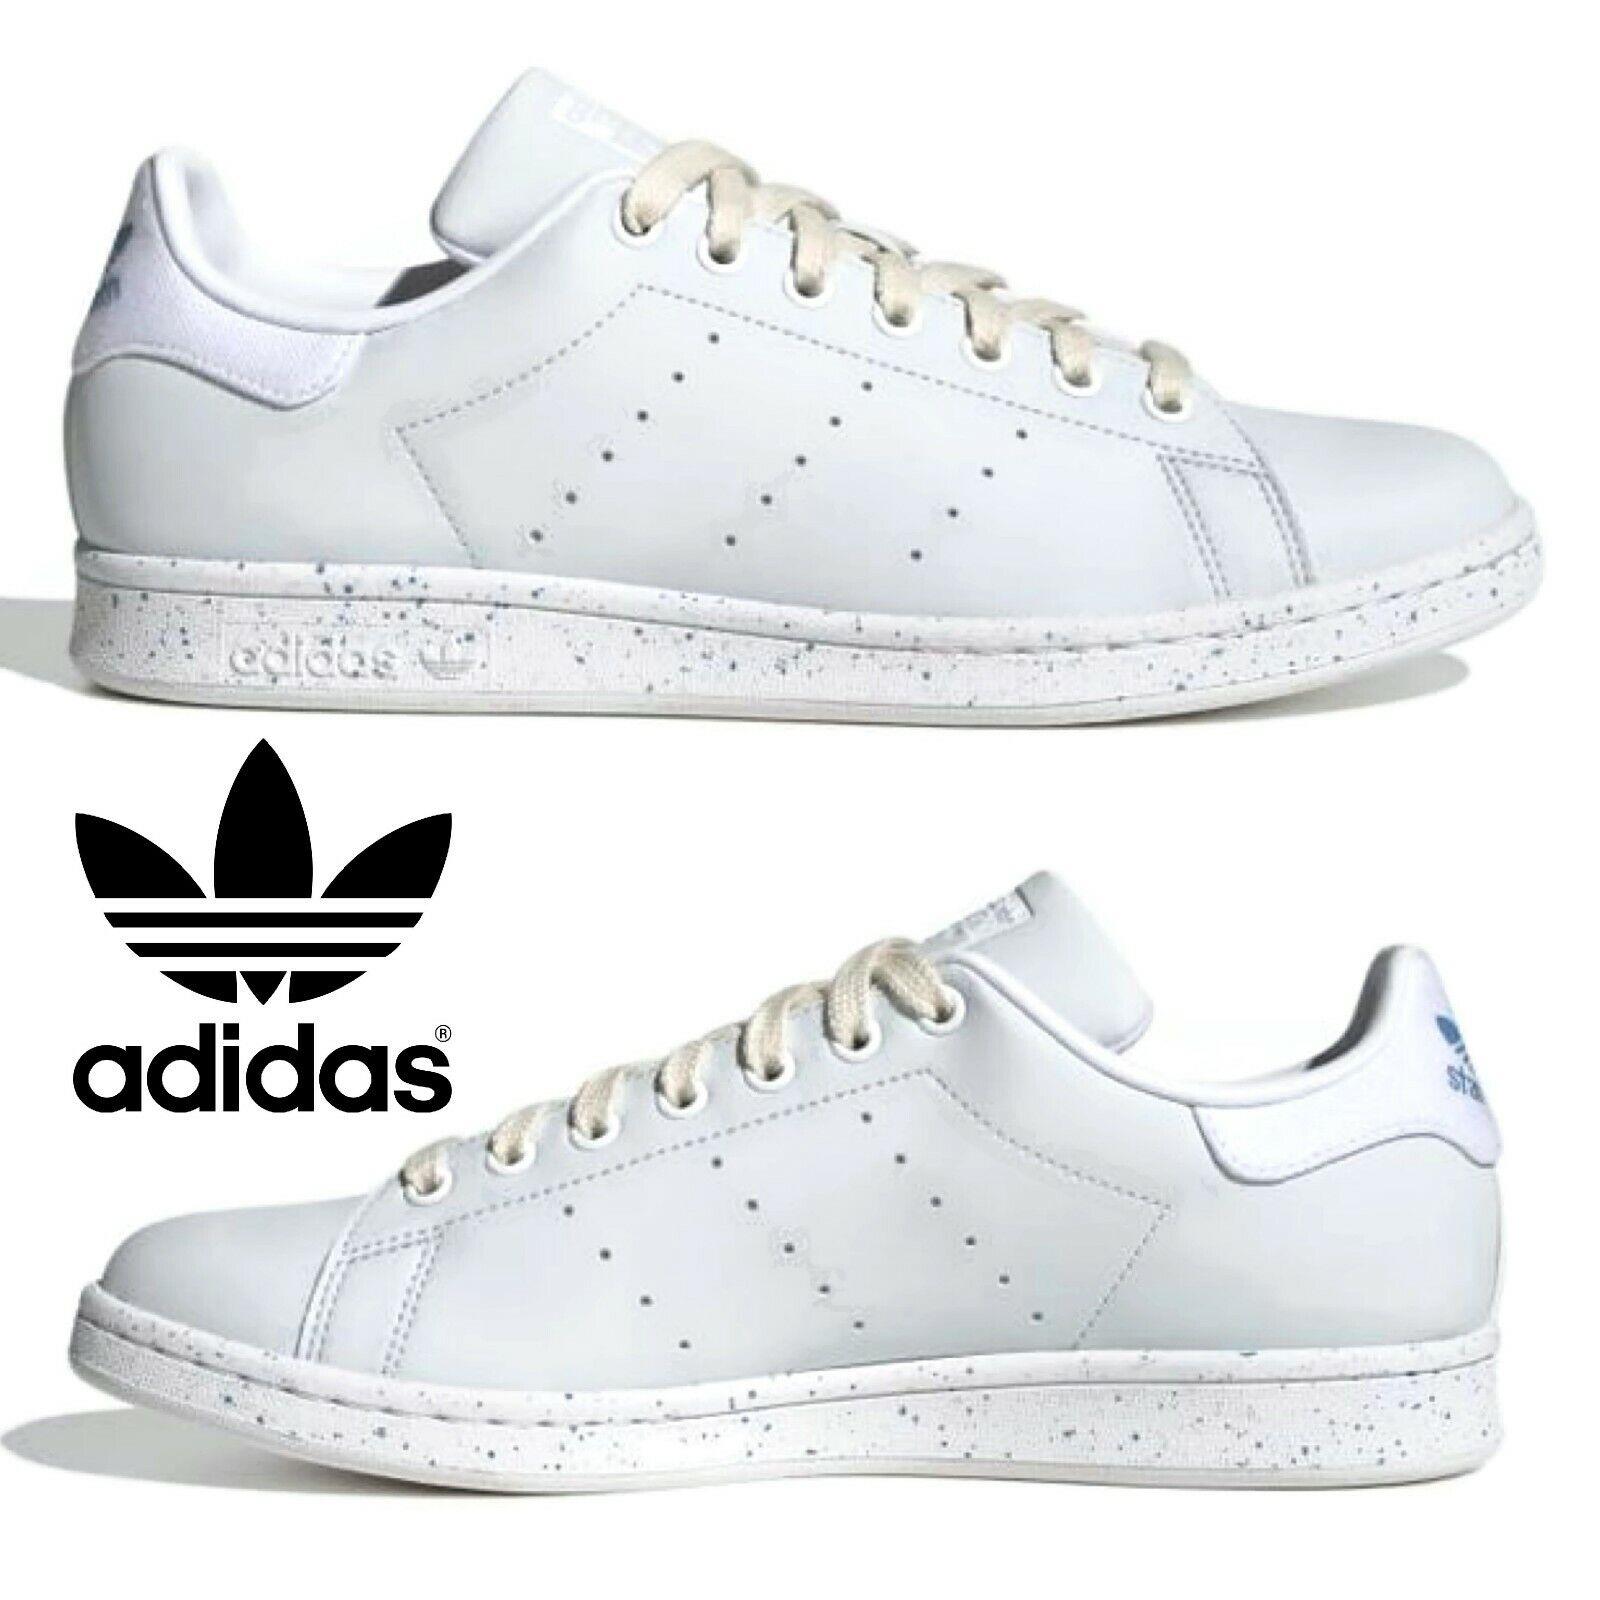 Adidas Originals Stan Smith Men`s Sneakers Comfort Sport Casual Shoes Blue Tint